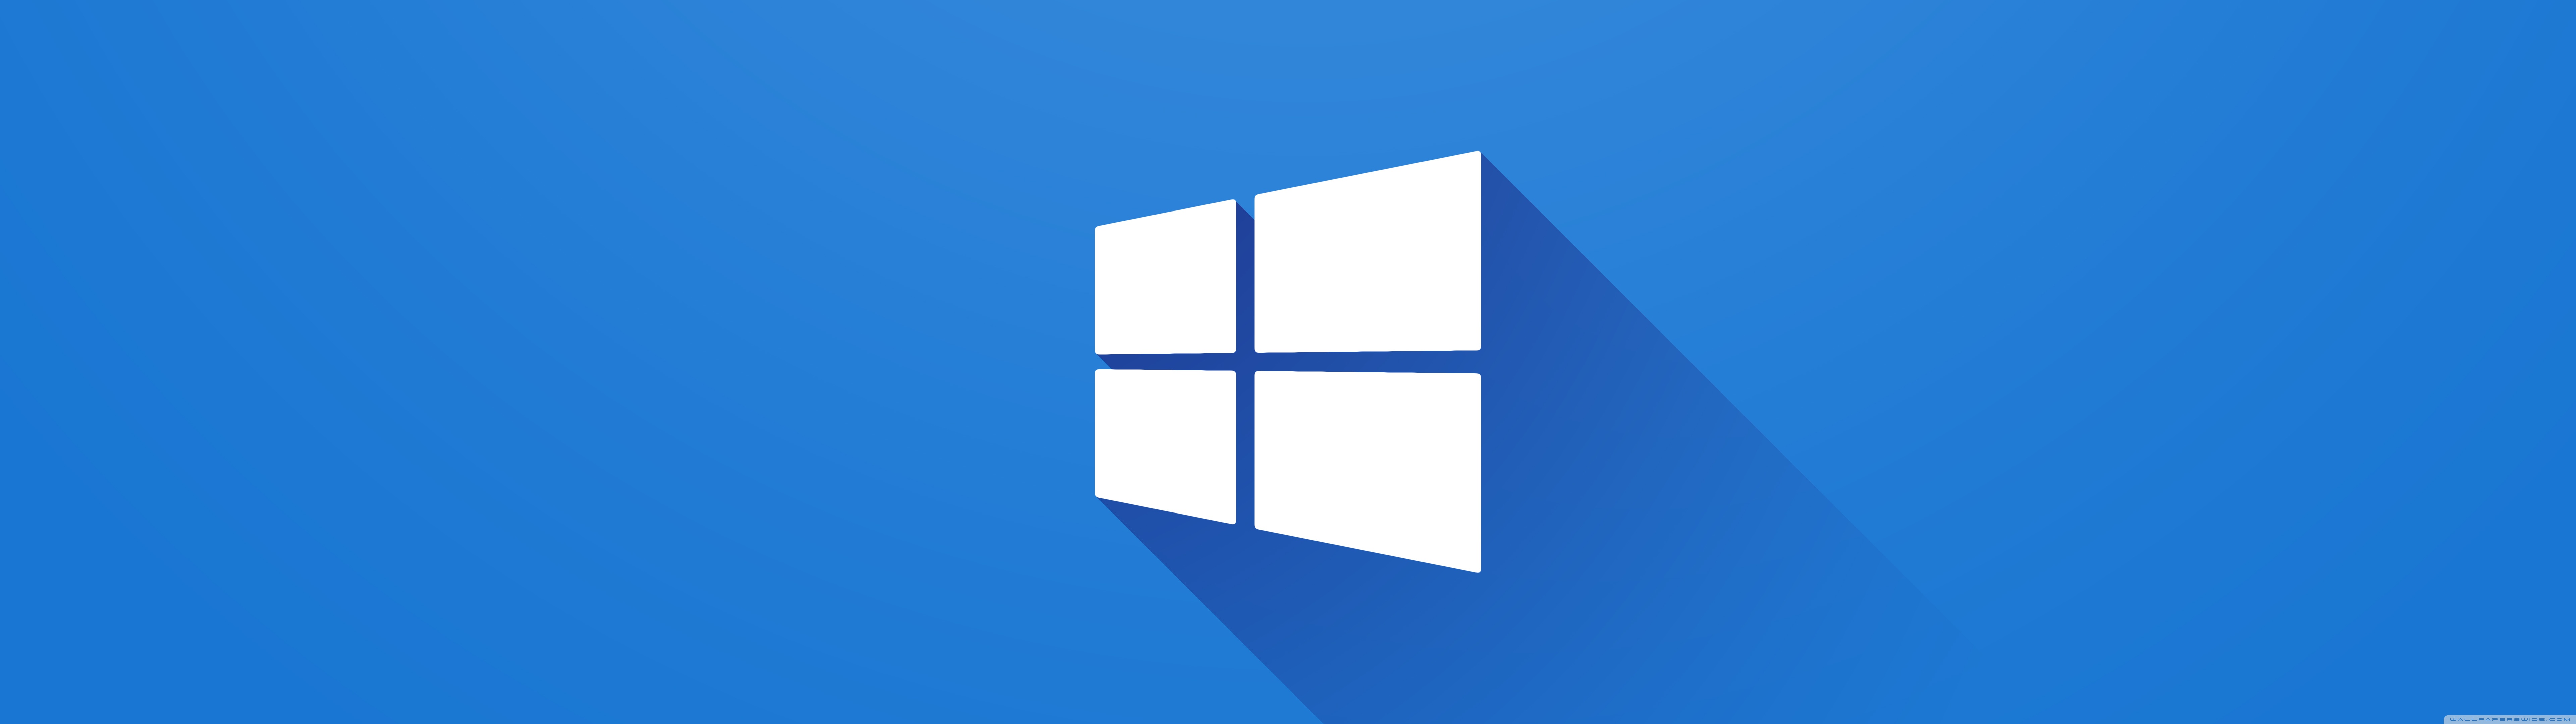 Windows Logo Ultra HD Desktop Background Wallpaper For